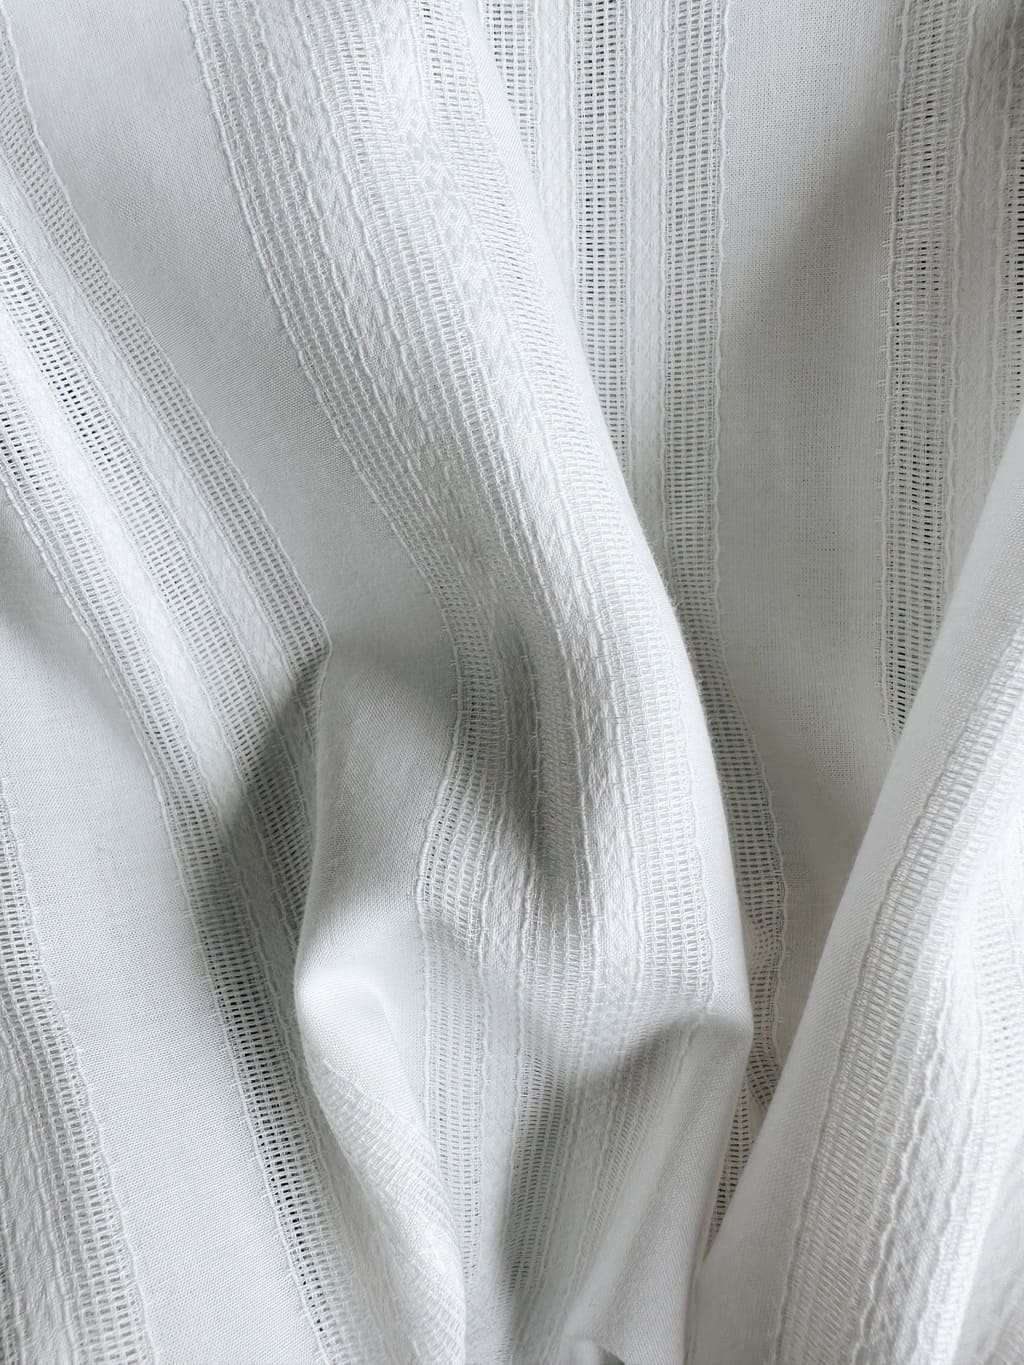 THE WHITE ODILE DRESS